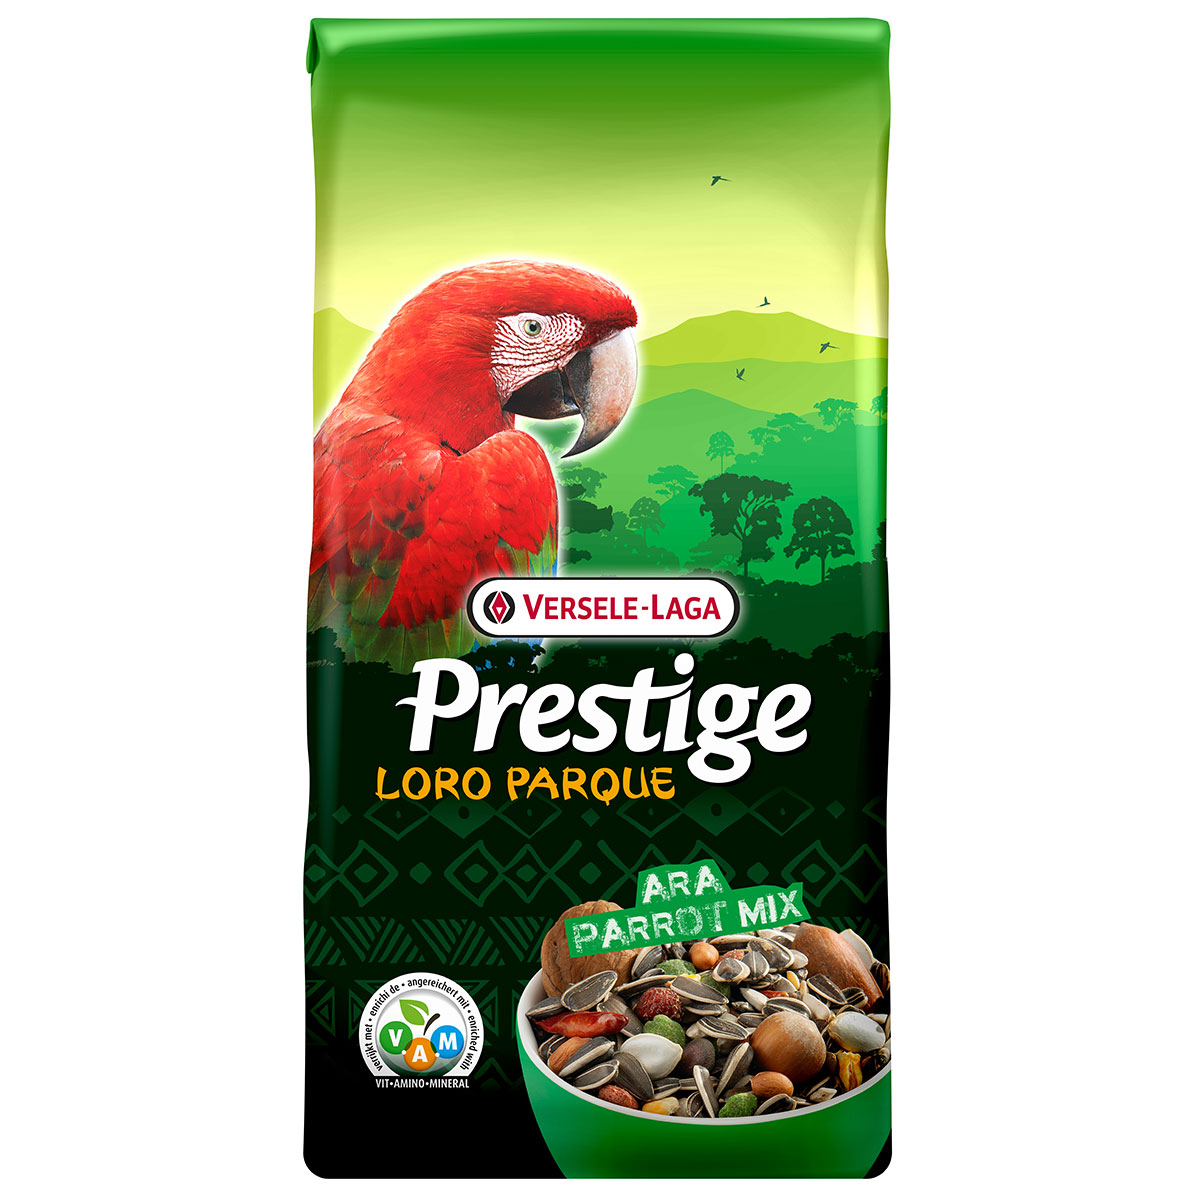 Versele Laga Prestige Loro Parque Ara Parrot Mix, 15 kg